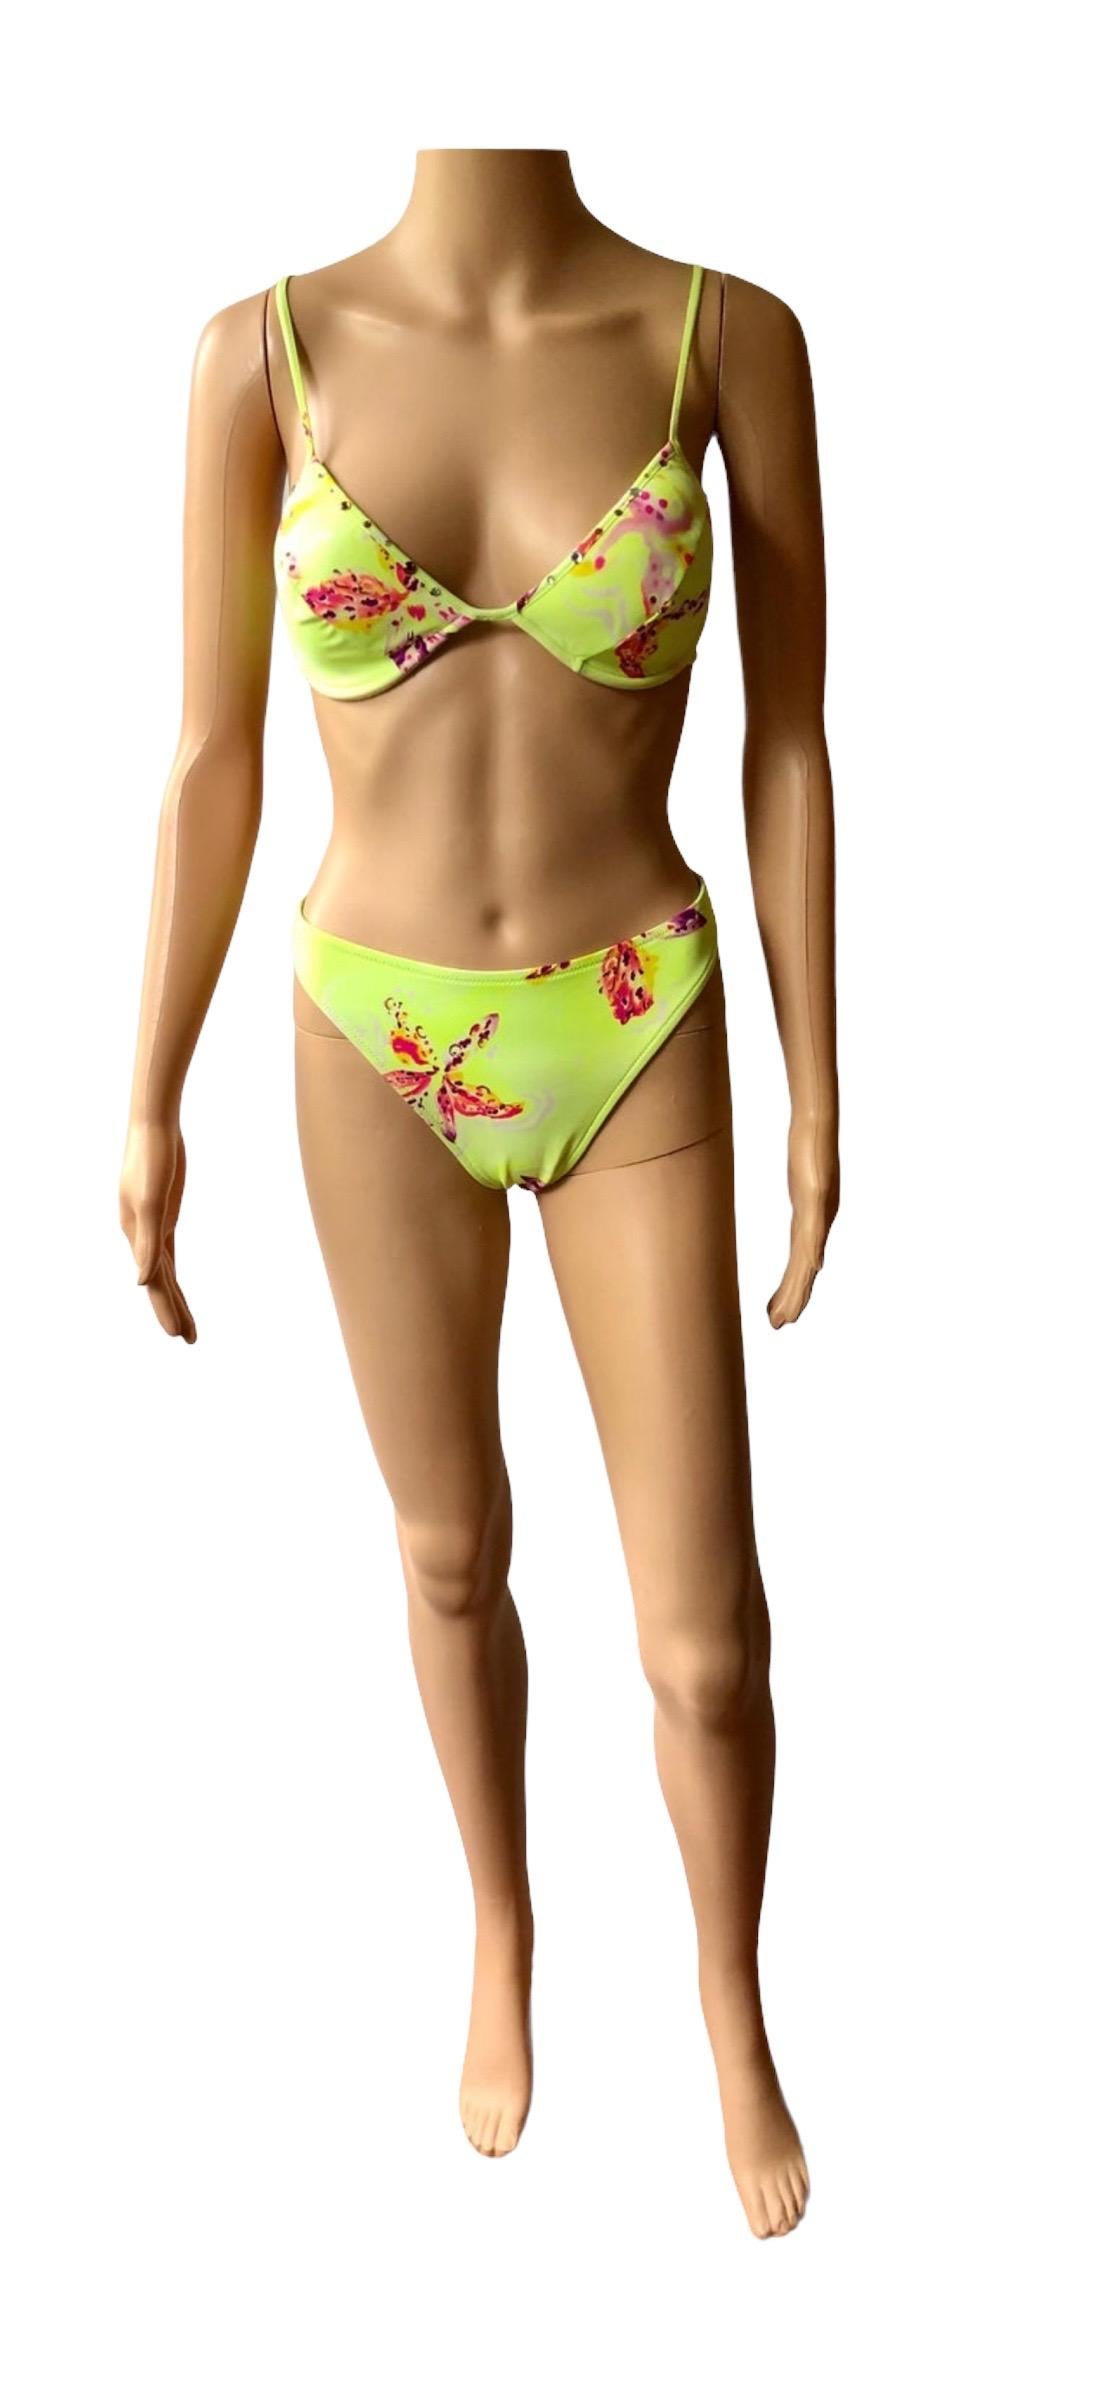 Gianni Versace S/S 2000 Orchid Neon Two-Piece Bikini Set Swimsuit Swimwear  For Sale 4